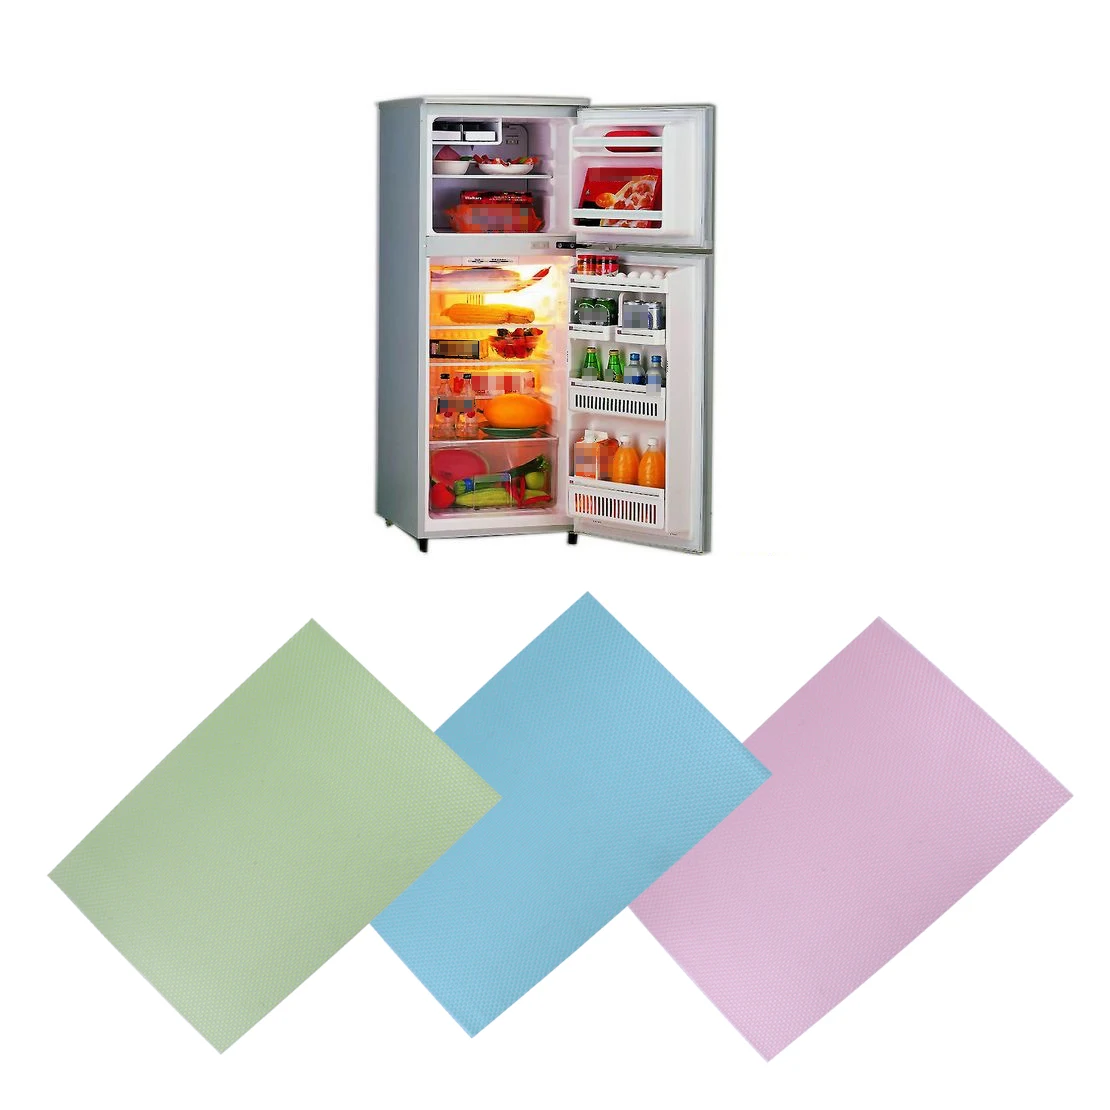 LETAOSK 4 шт. 45x29 см EVA моющийся Водонепроницаемый противообрастающий коврик для холодильника, коврик для холодильника, вкладыши для ящиков, анти Мороз для кухонной полки